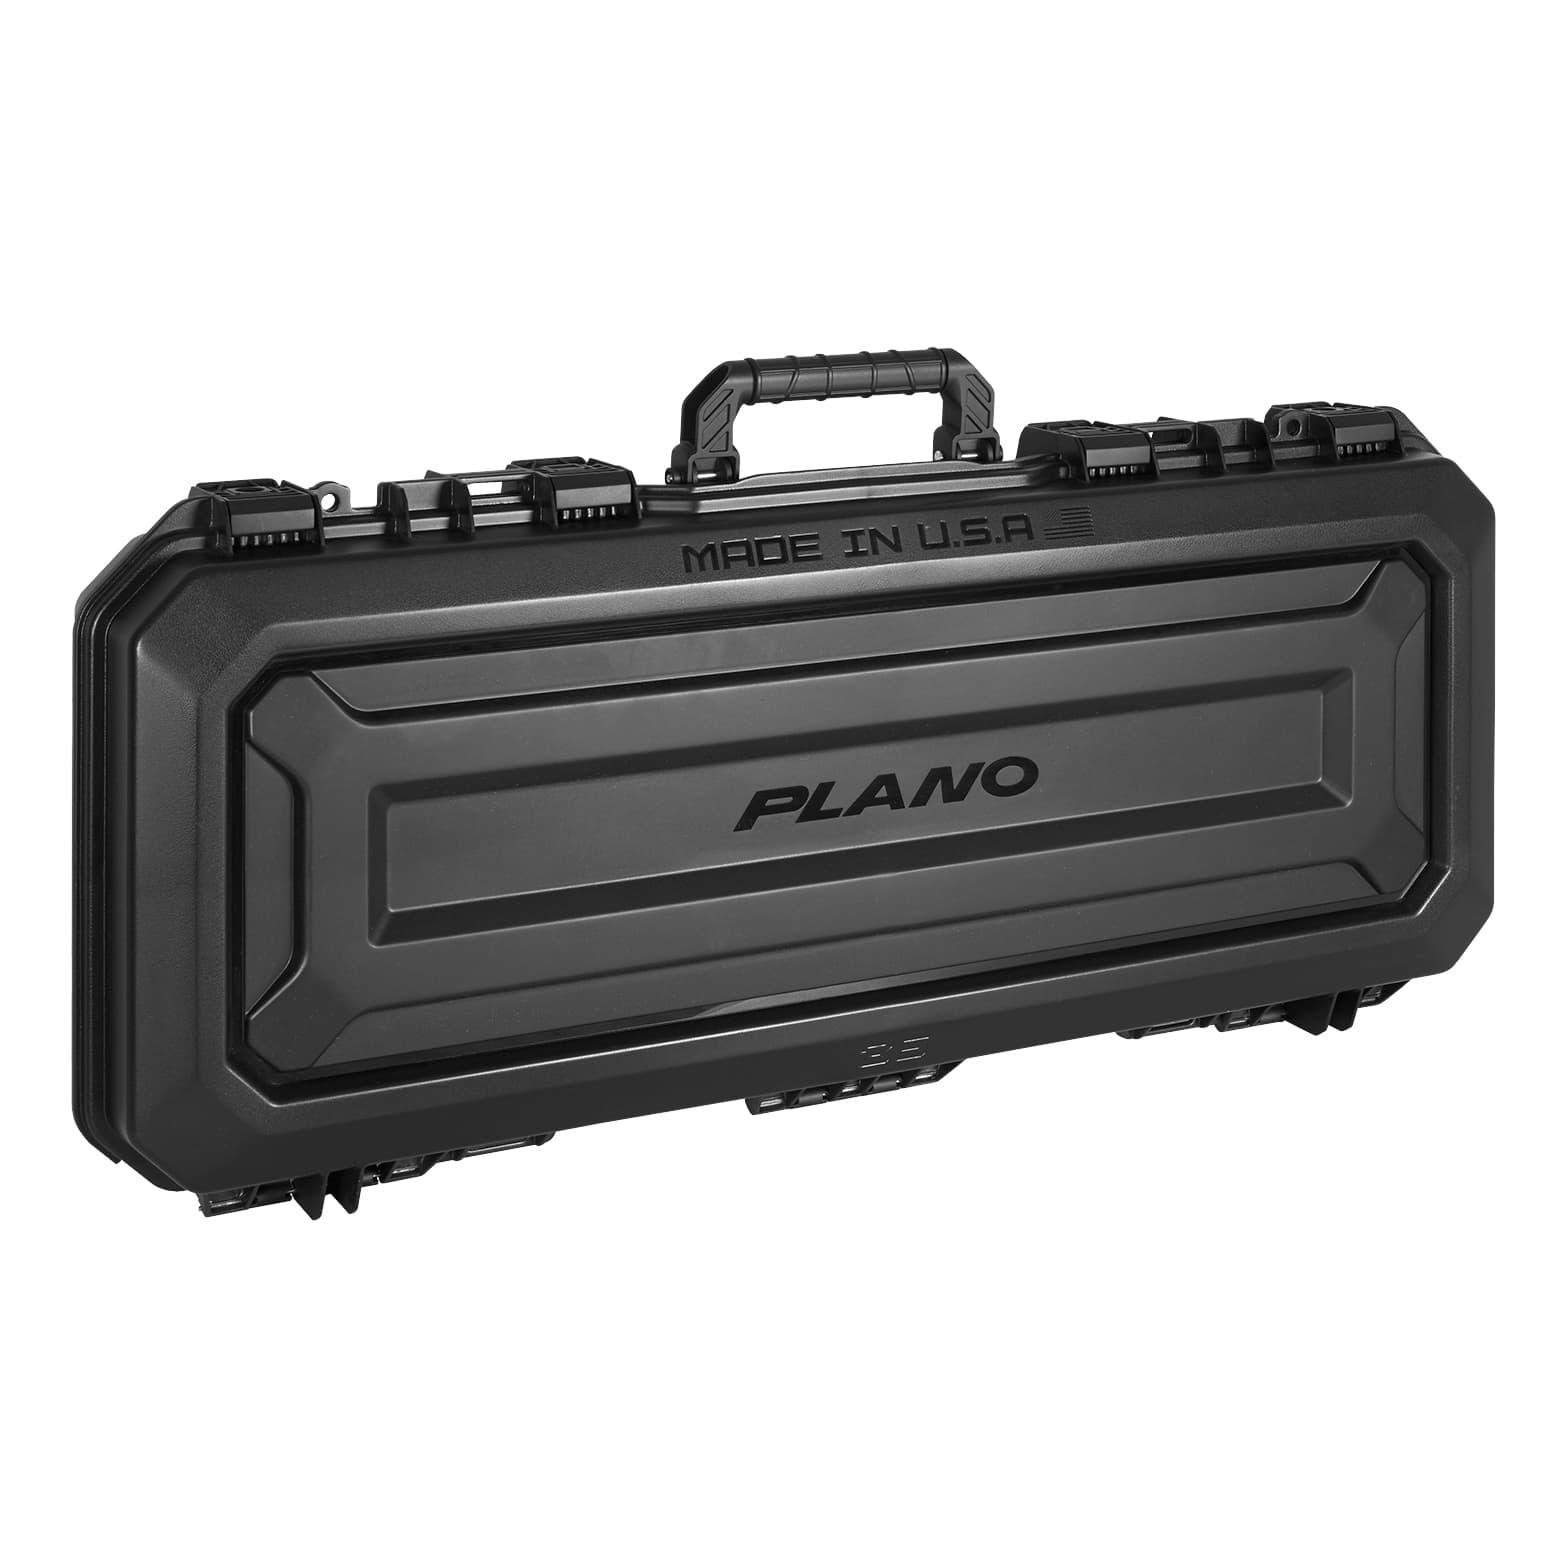 Plano® All Weather Gun Case - 36"